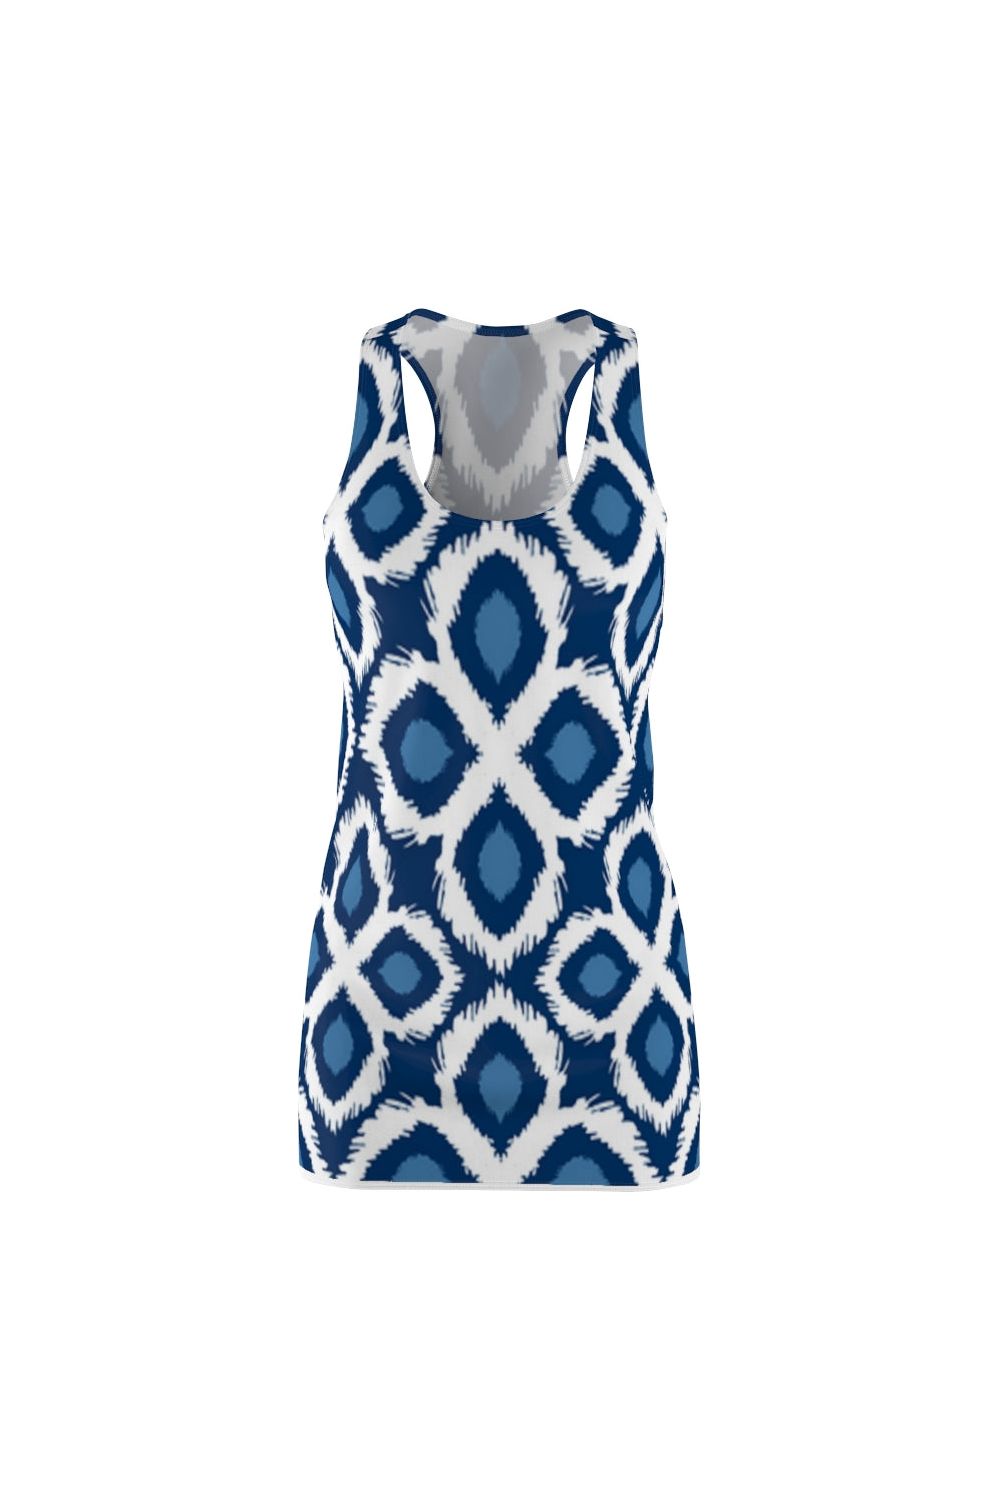 Women's Blue and White Racerback Dress - NicholesGifts.online